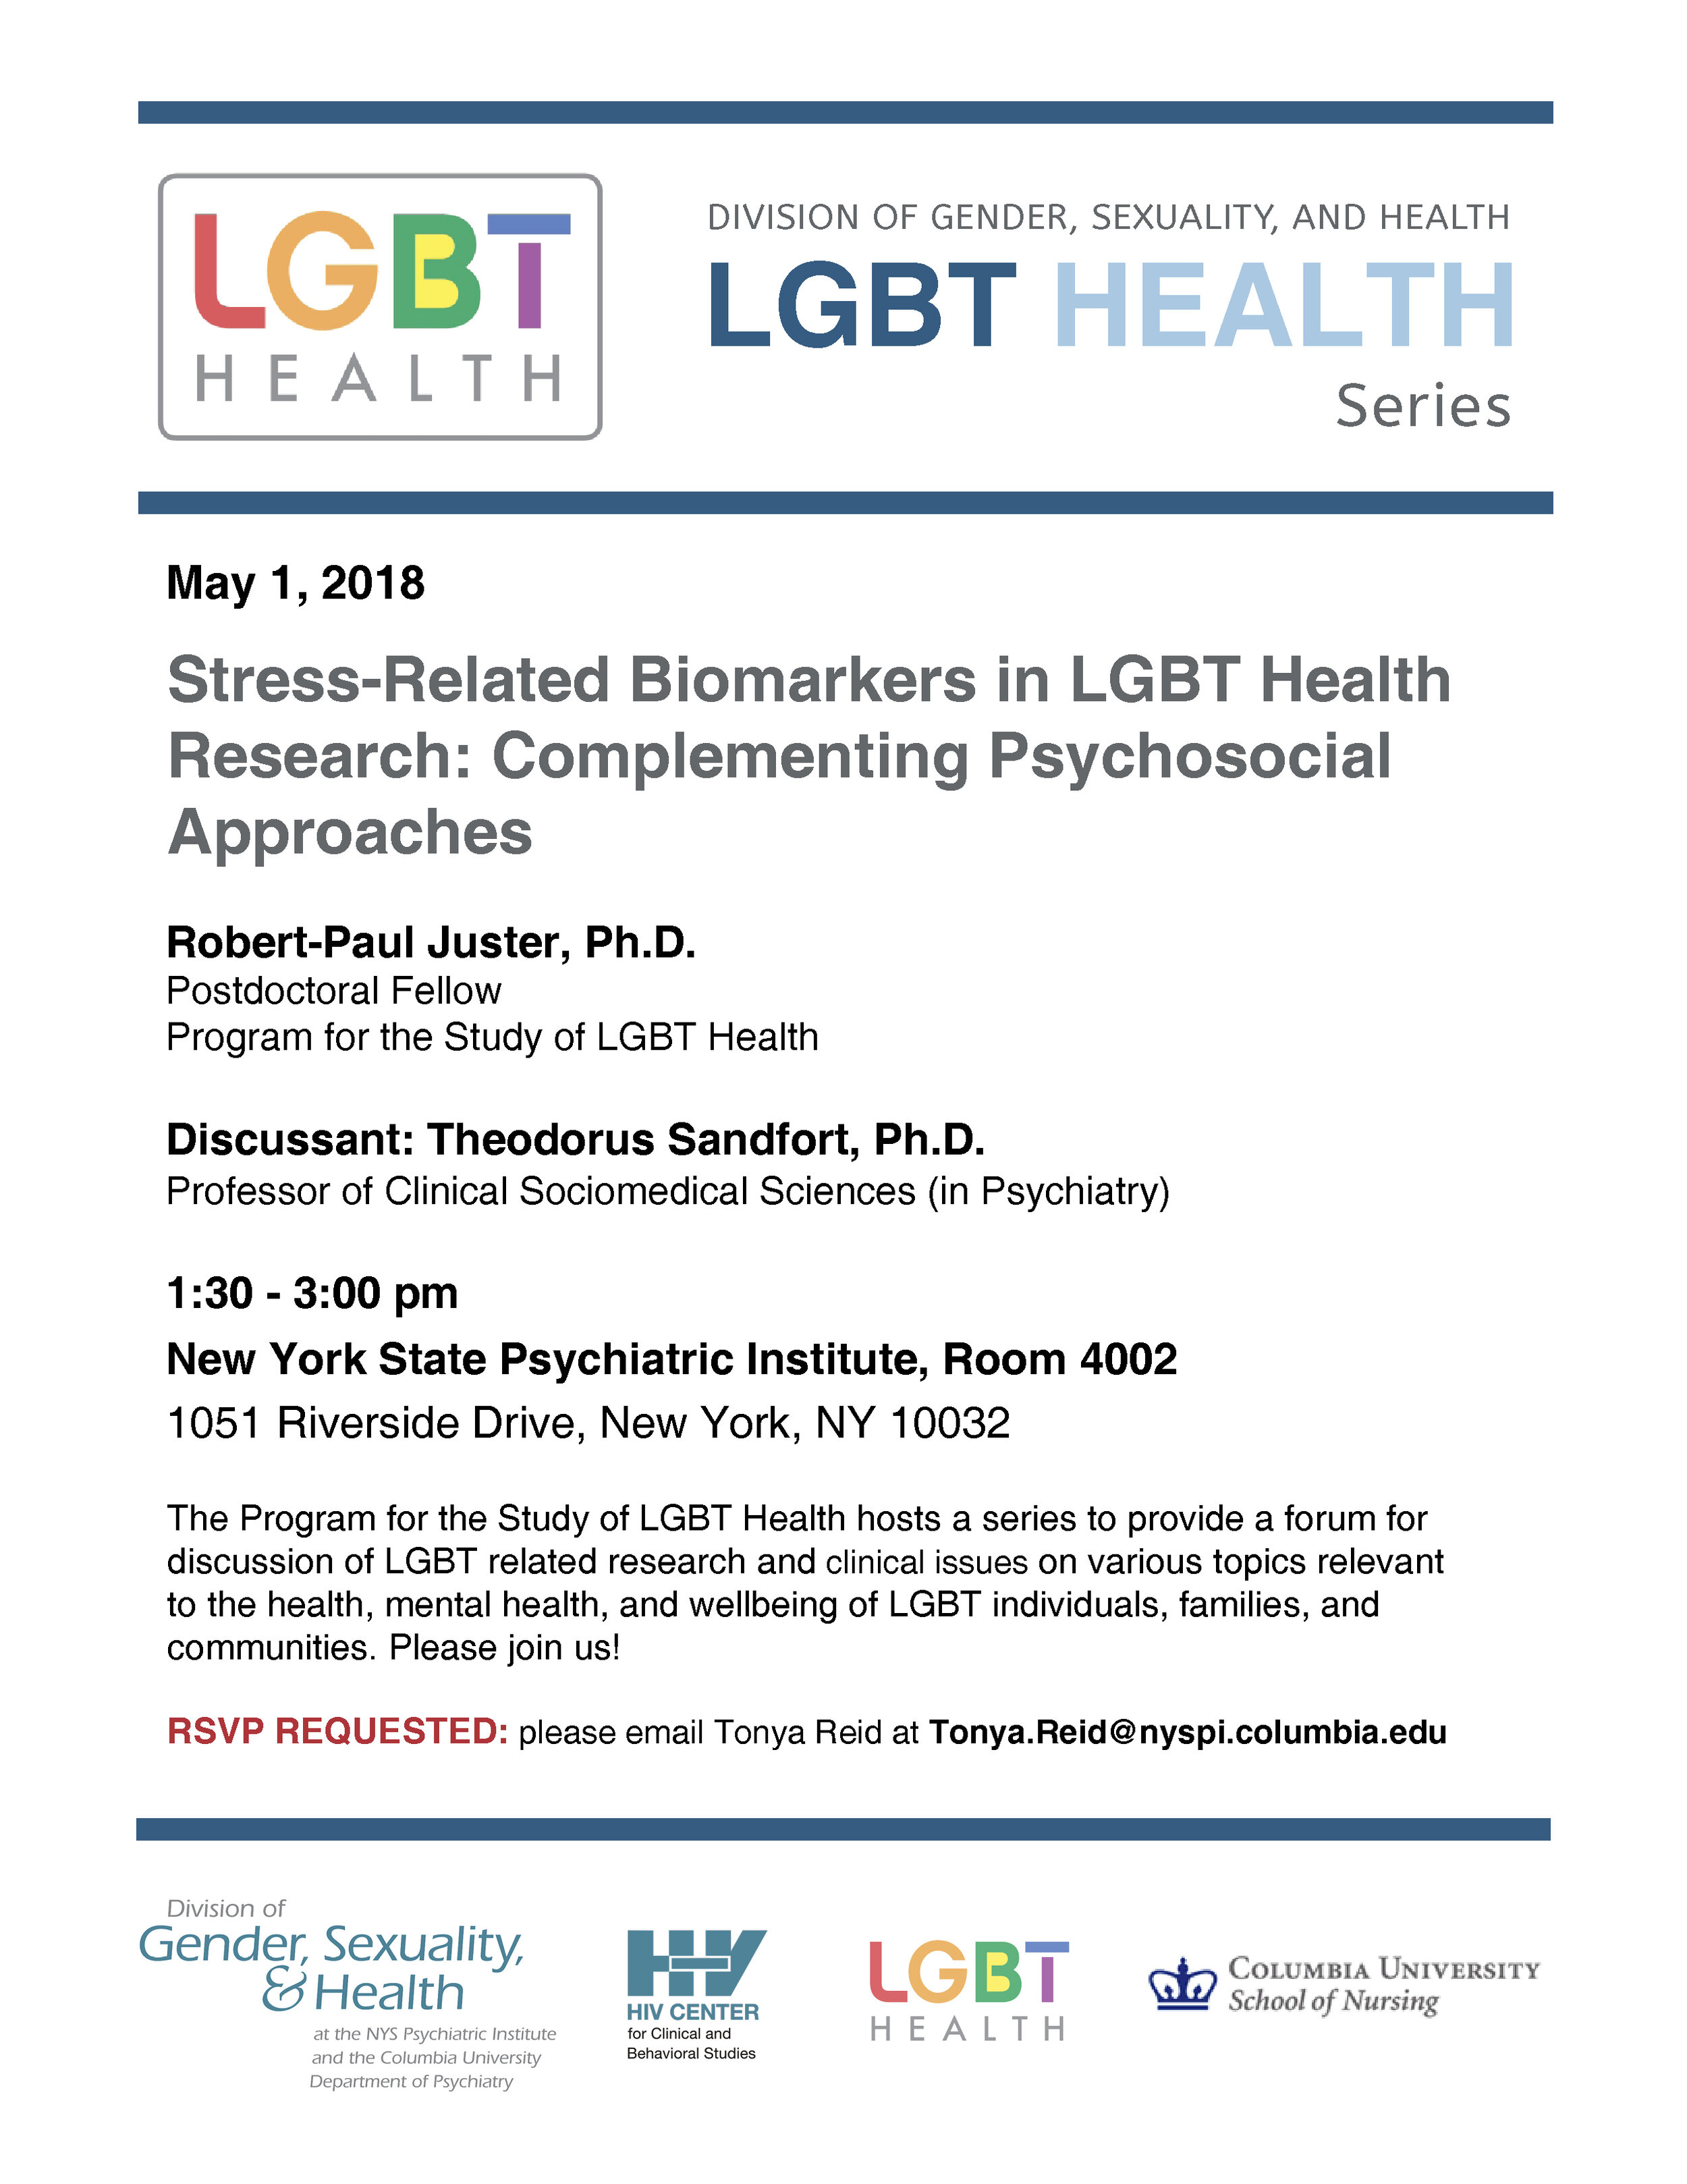 LGBT Health Series May 1 2018.jpg